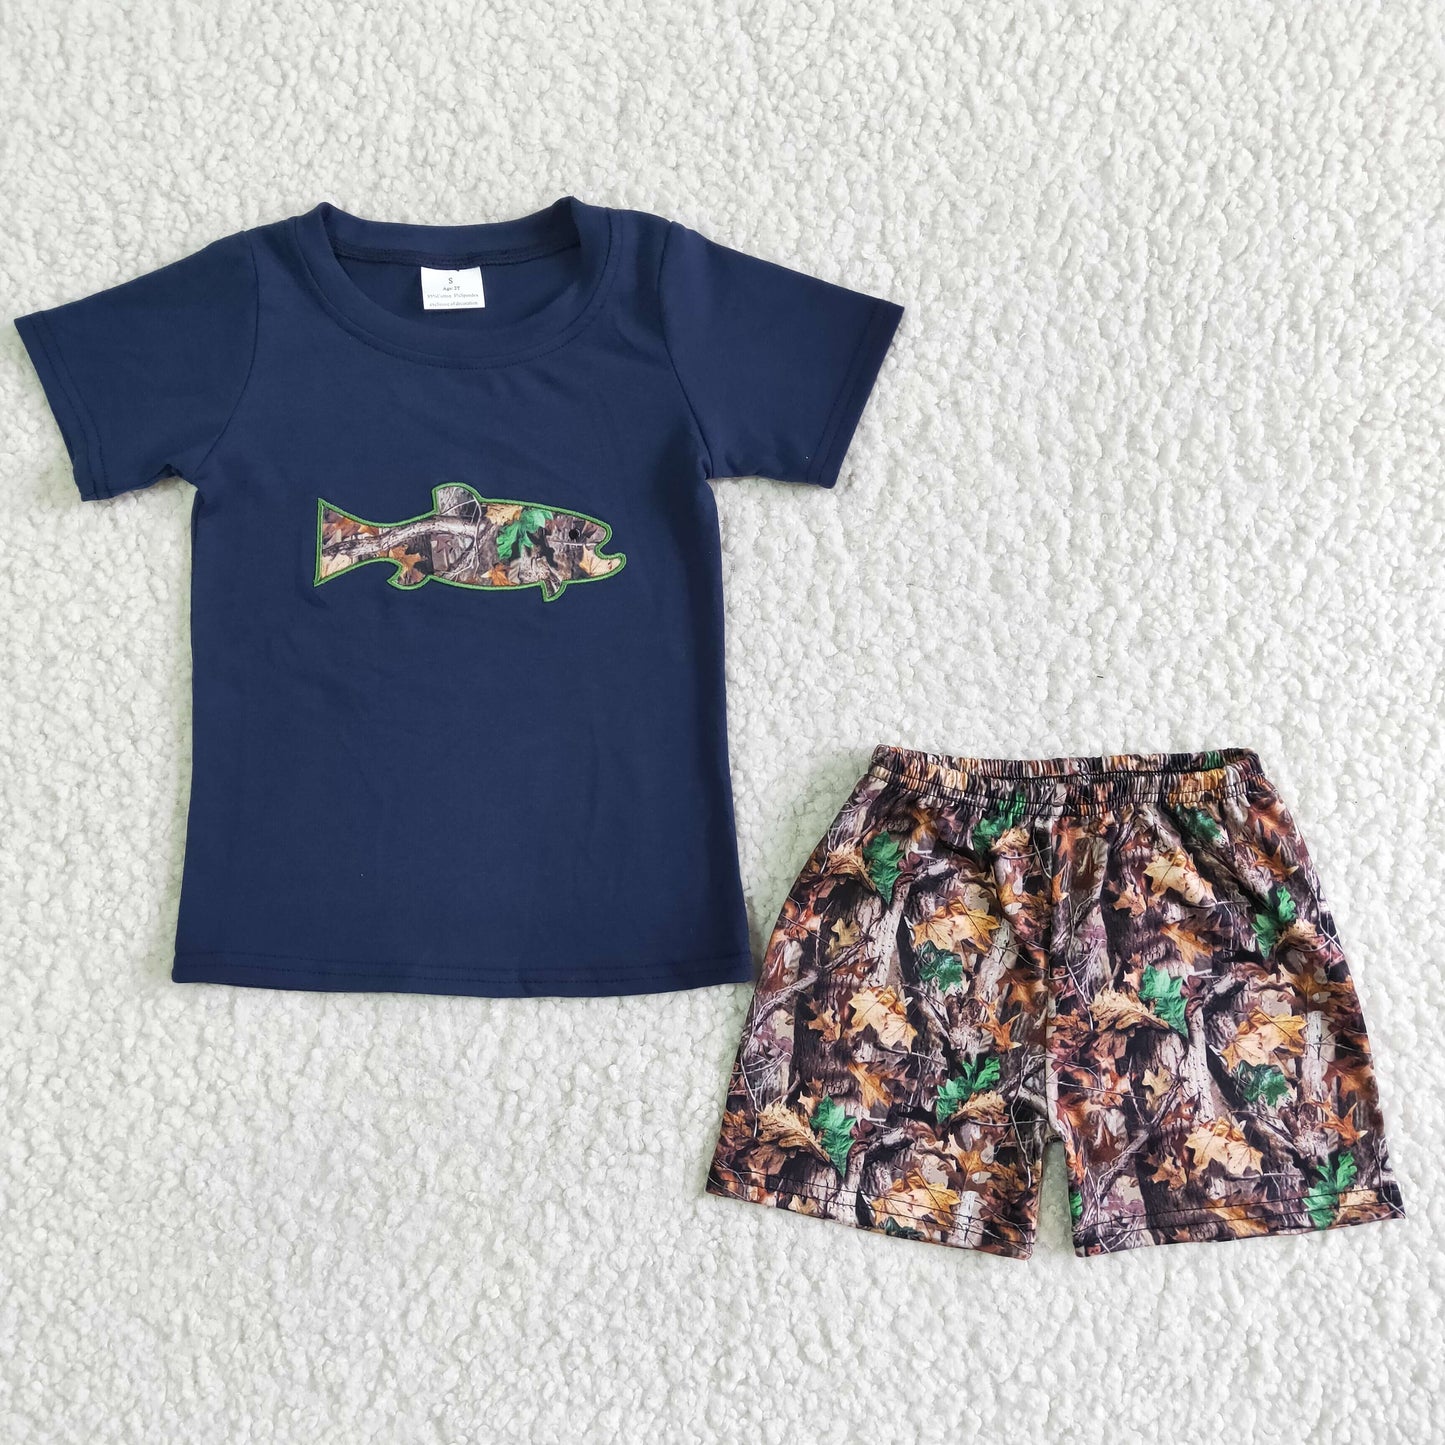 Fish embroidery cotton shirt camo shorts boy summer clothing